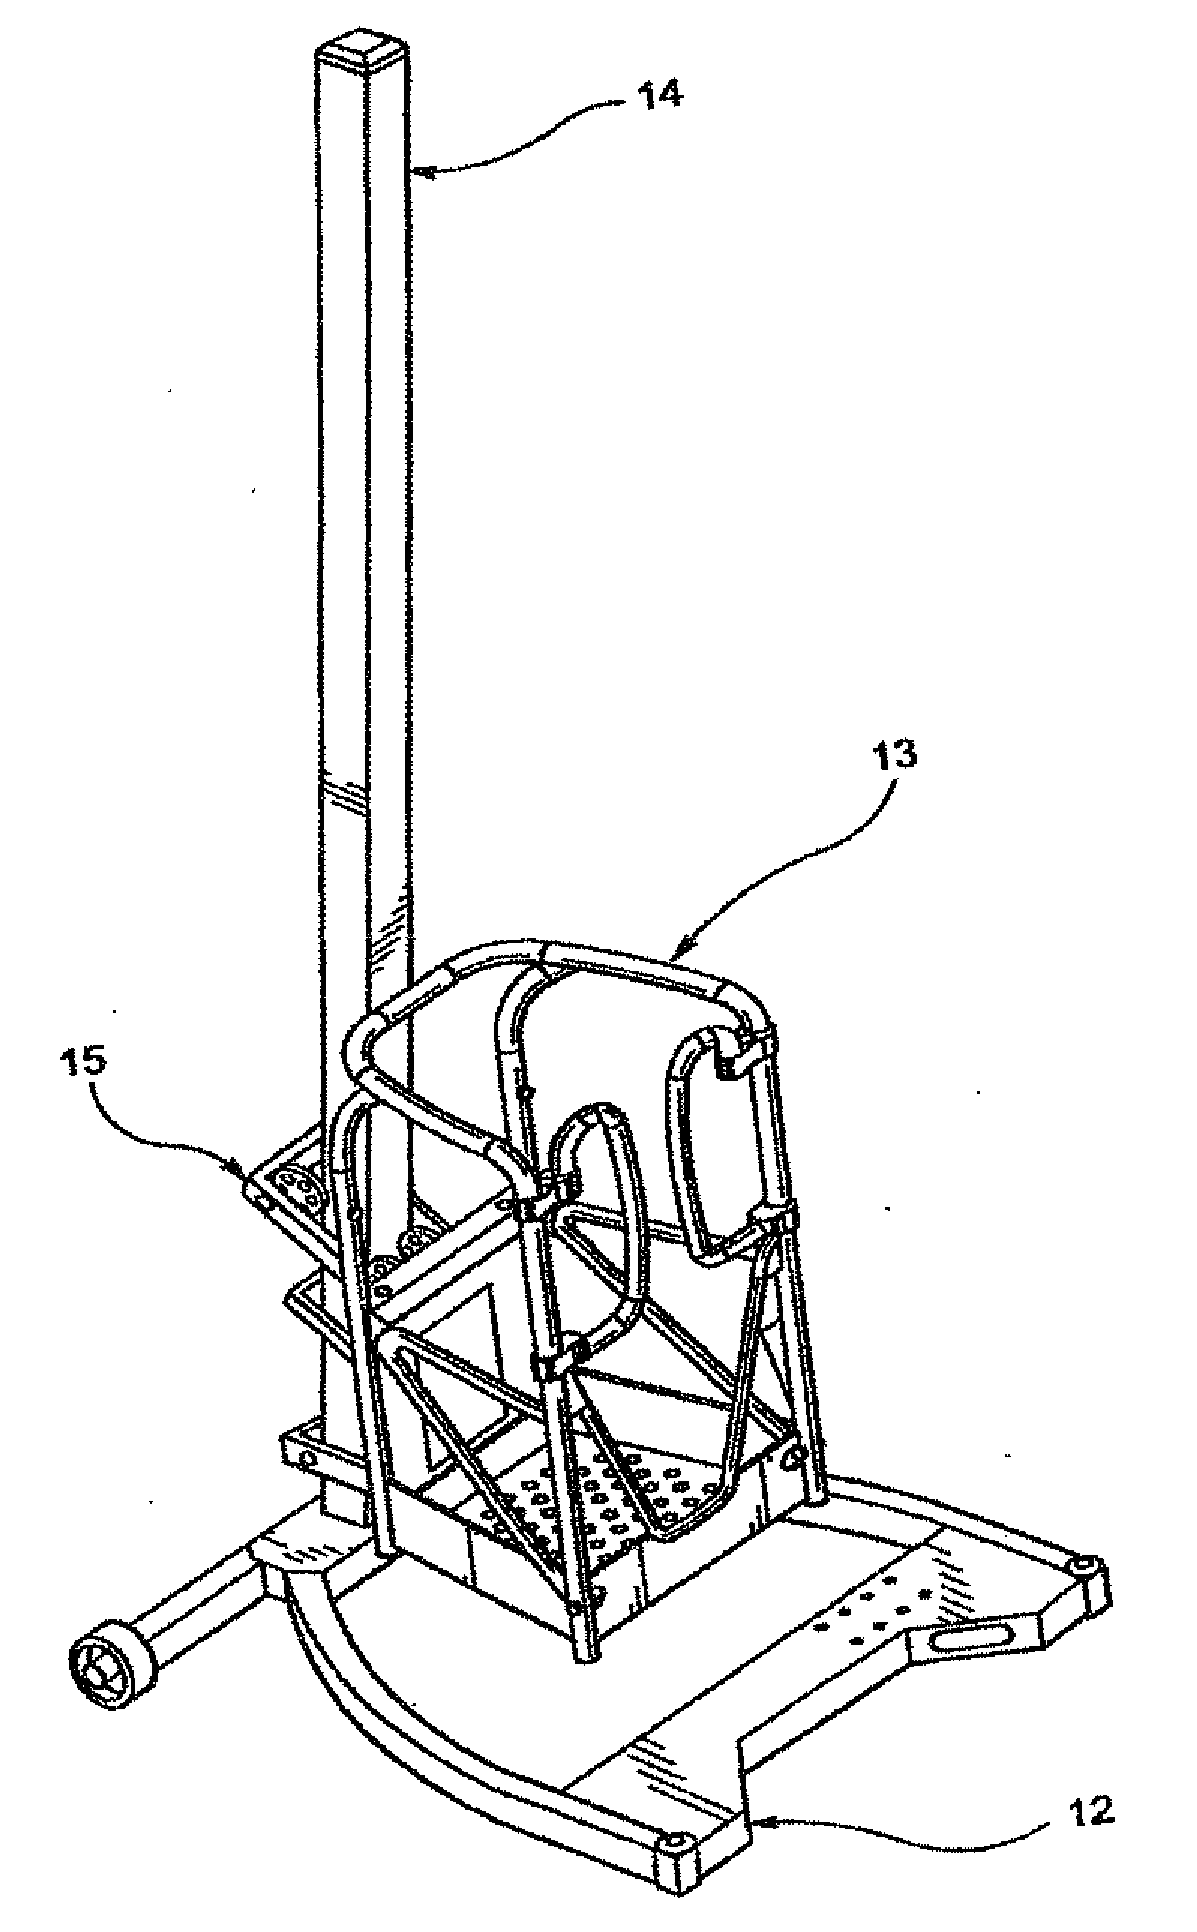 Mast Lift and Mast Lift System